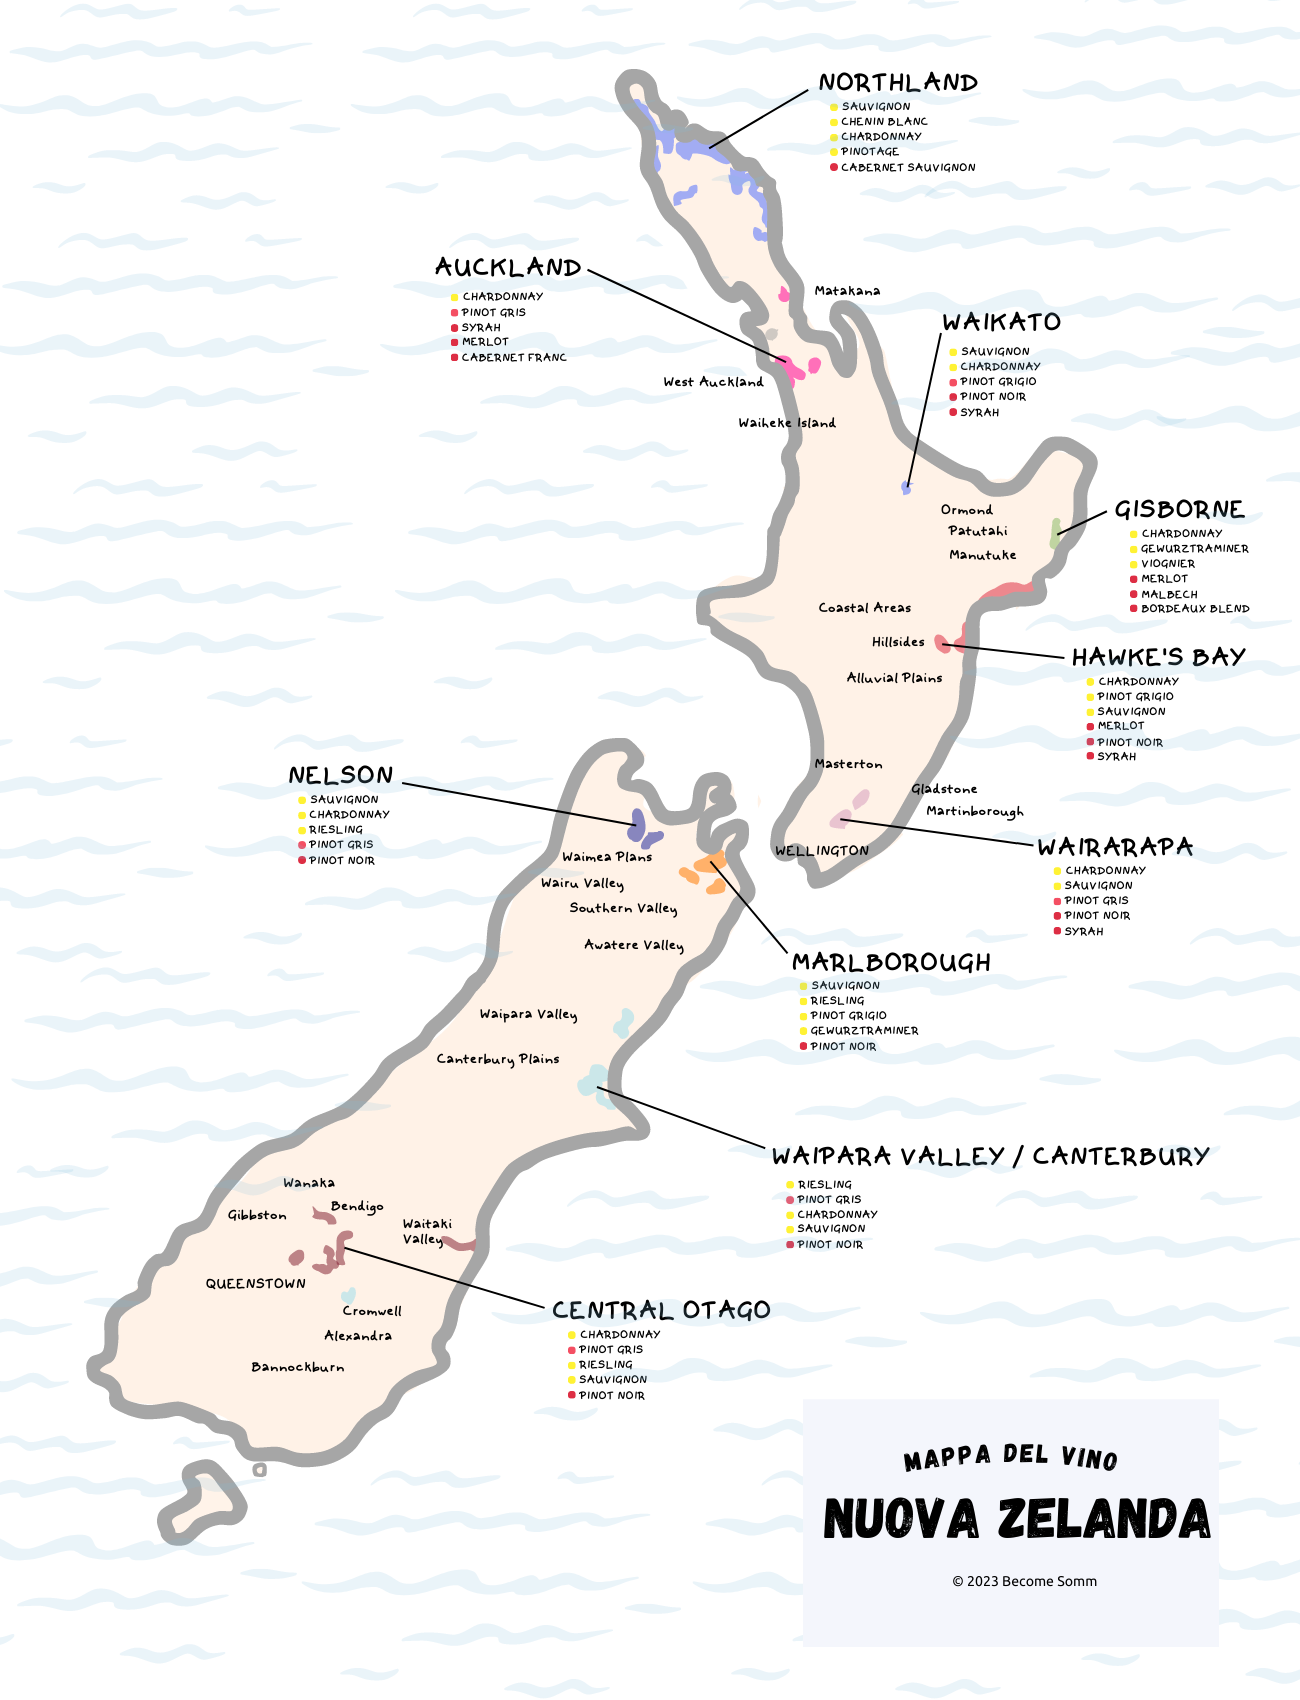 Wine map new zealand
Mappa del vino nuova zelanda
carte des vins de Nouvelle-Zélande